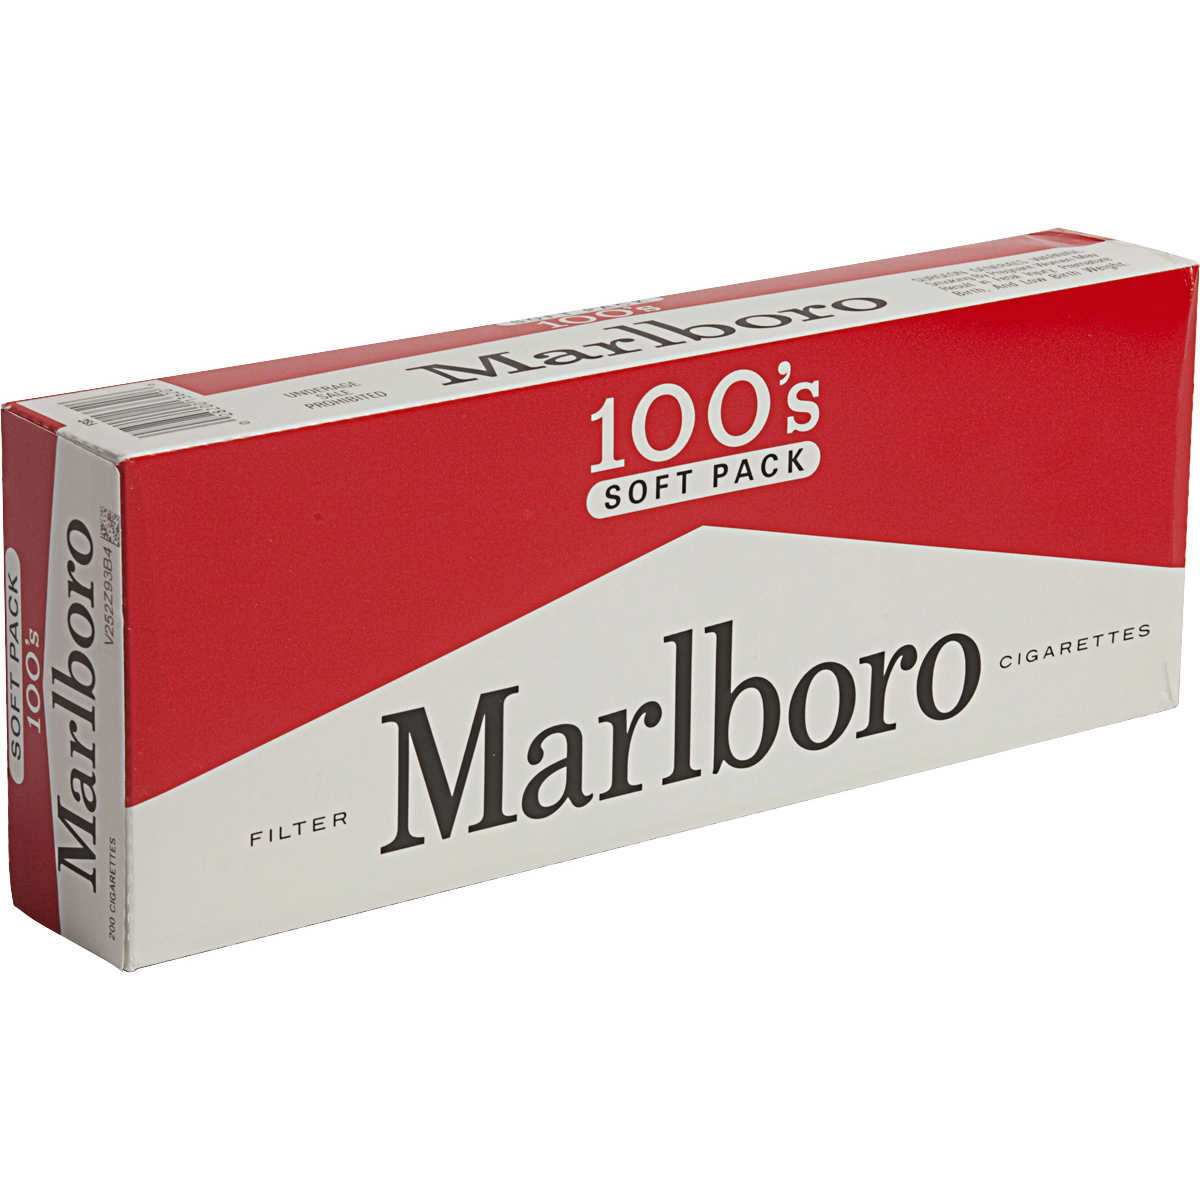 How much are a carton of marlboro cigarettes